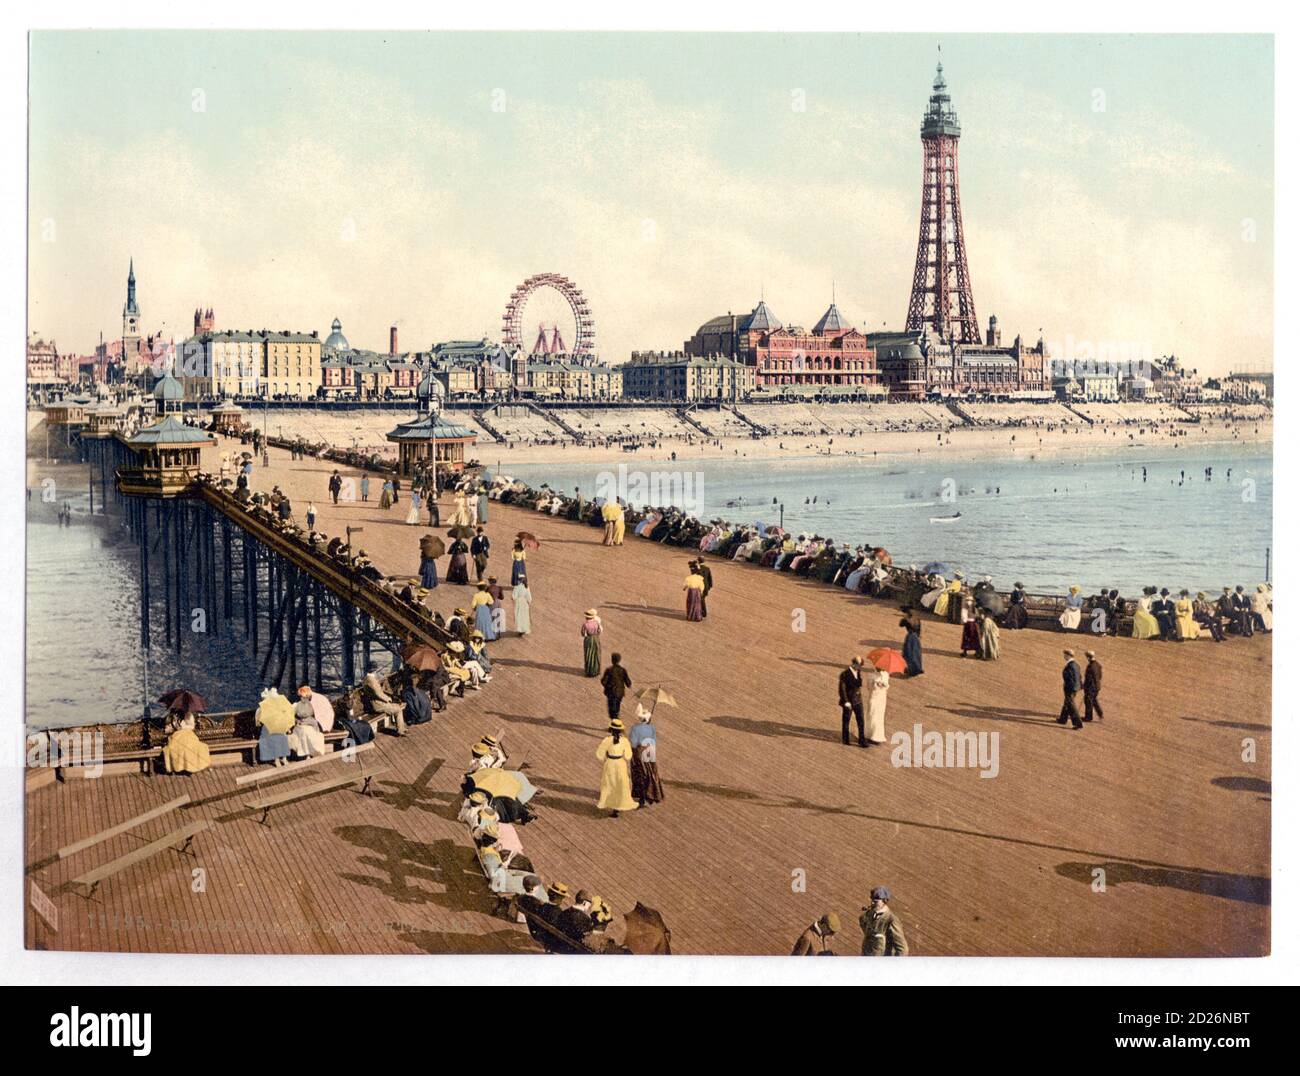 Photochrom print, Victorian seaside Stock Photo